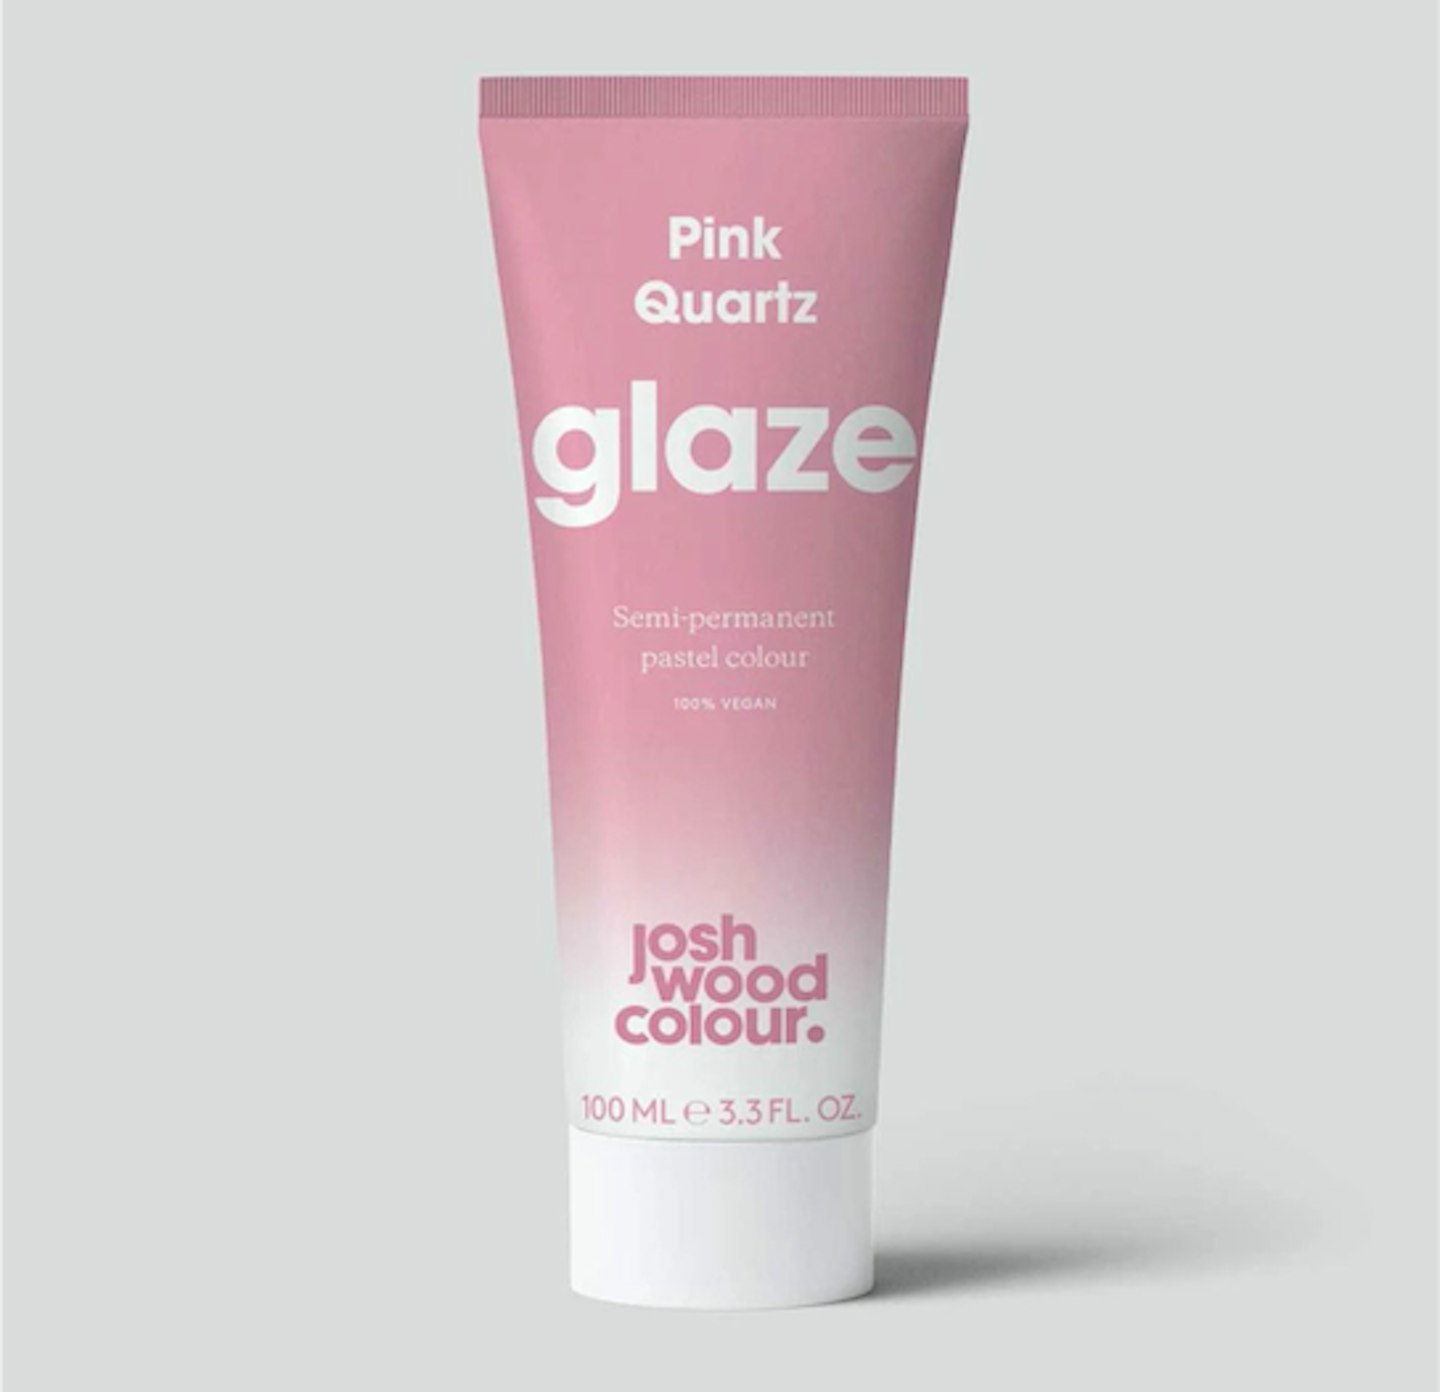 Josh Wood Colour, Pink Quartz Hair Glaze, 19